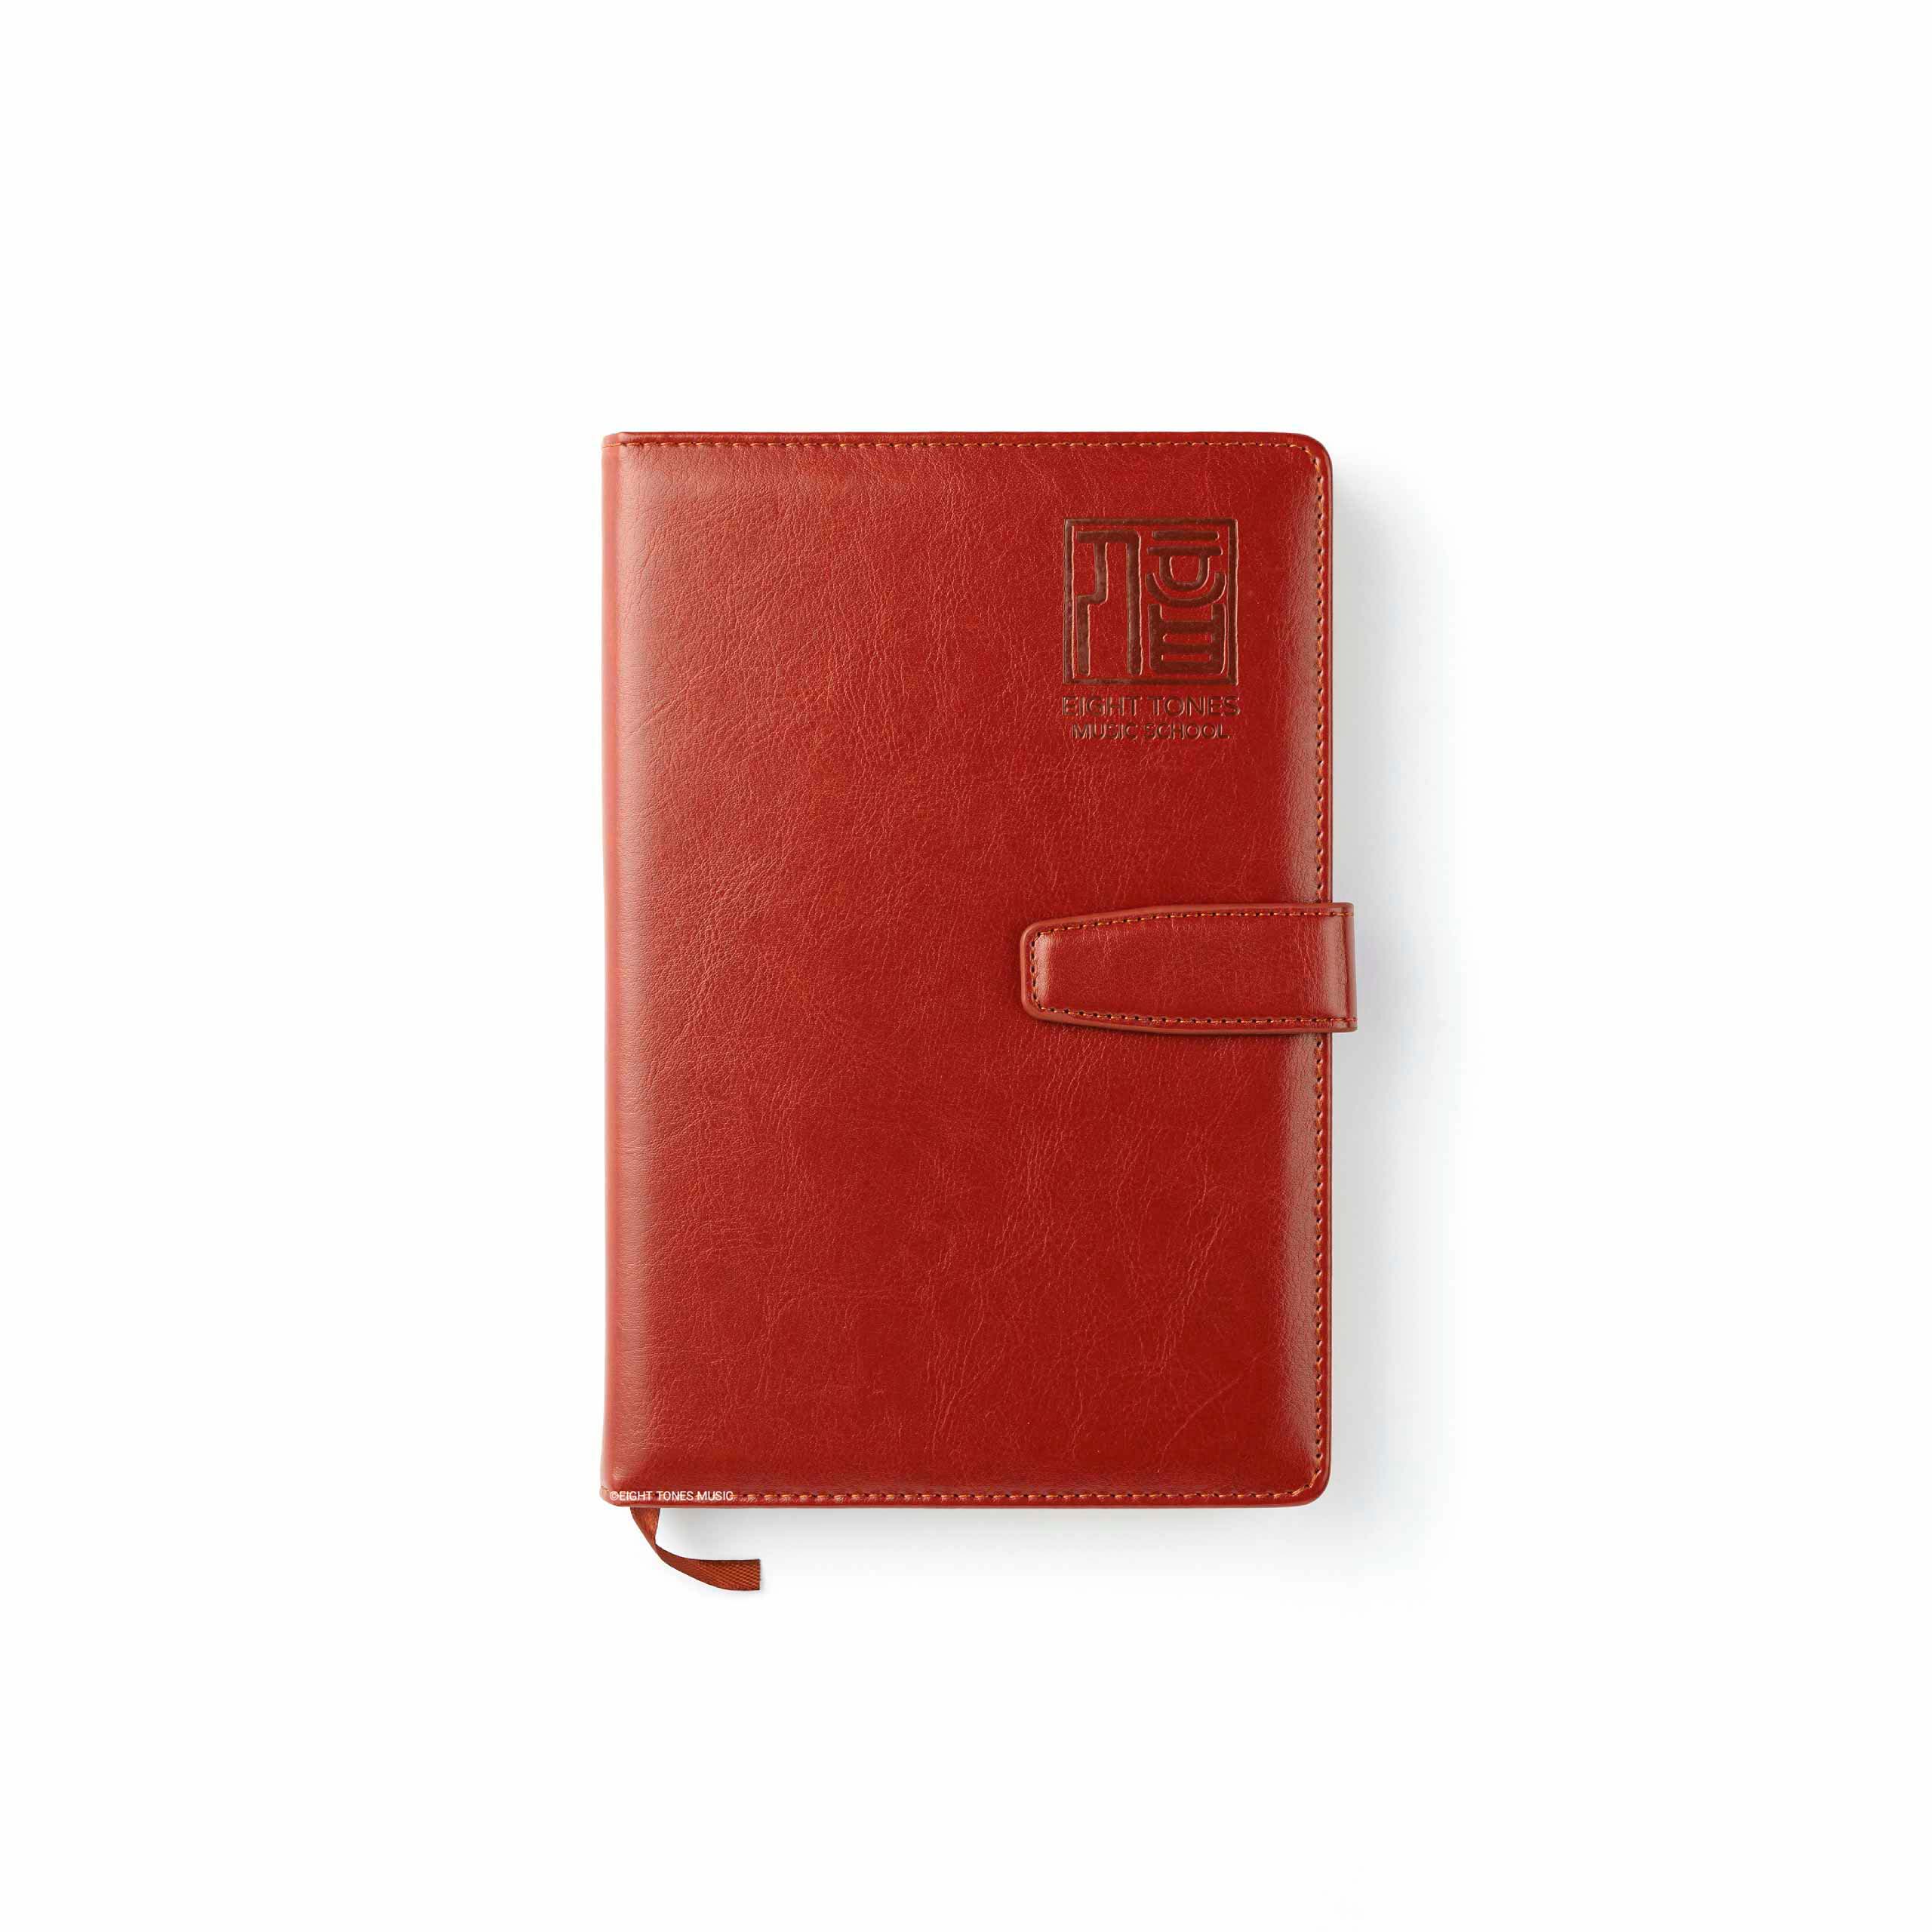 Eight Tones Notebook exterior